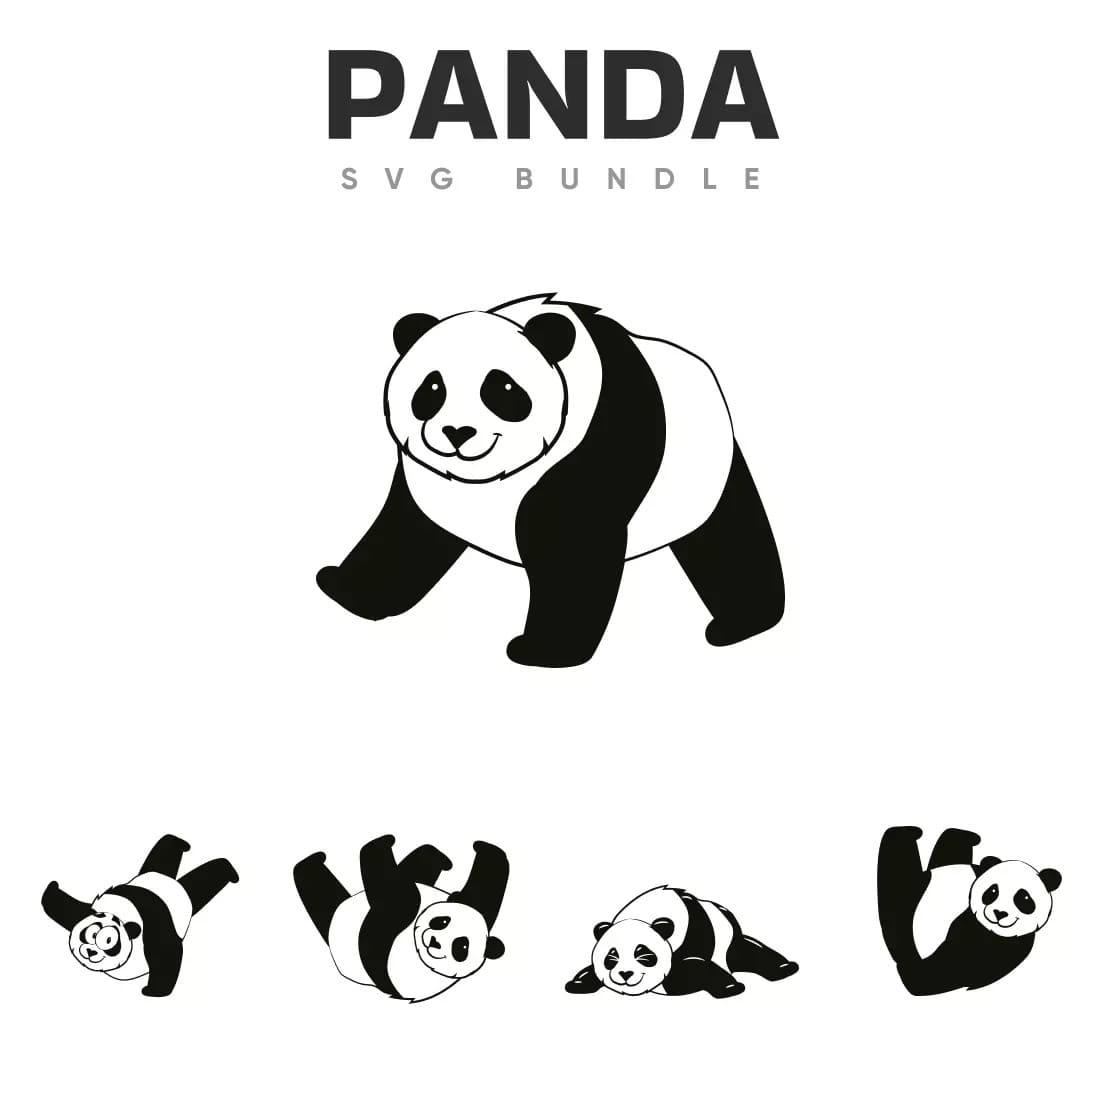 Panda svg bundle.